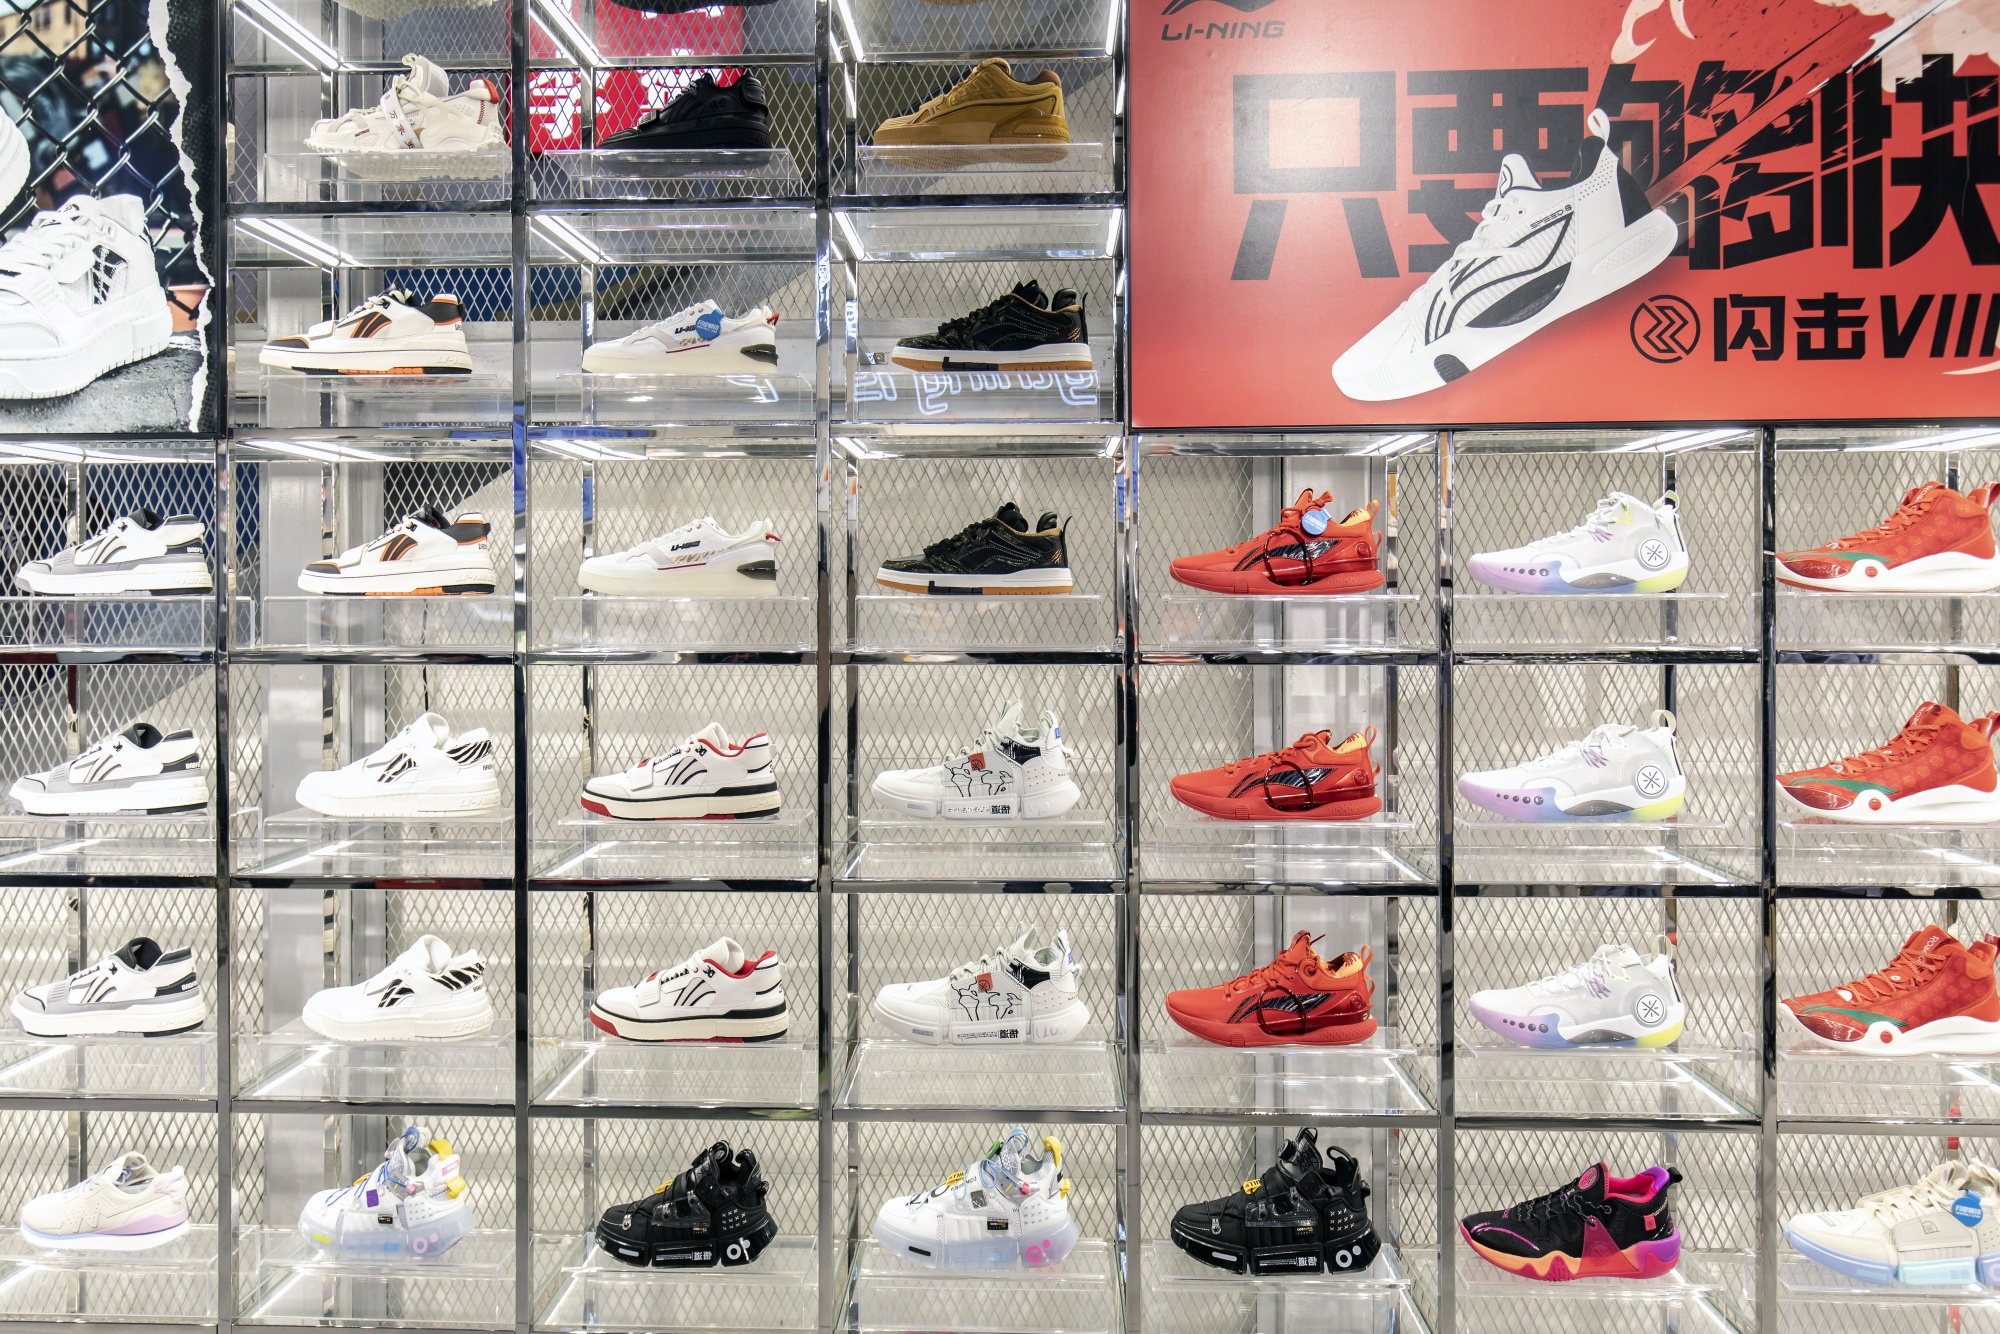 China Valuable Li Ning Maker Taking on Nike Leads Growth - Bloomberg